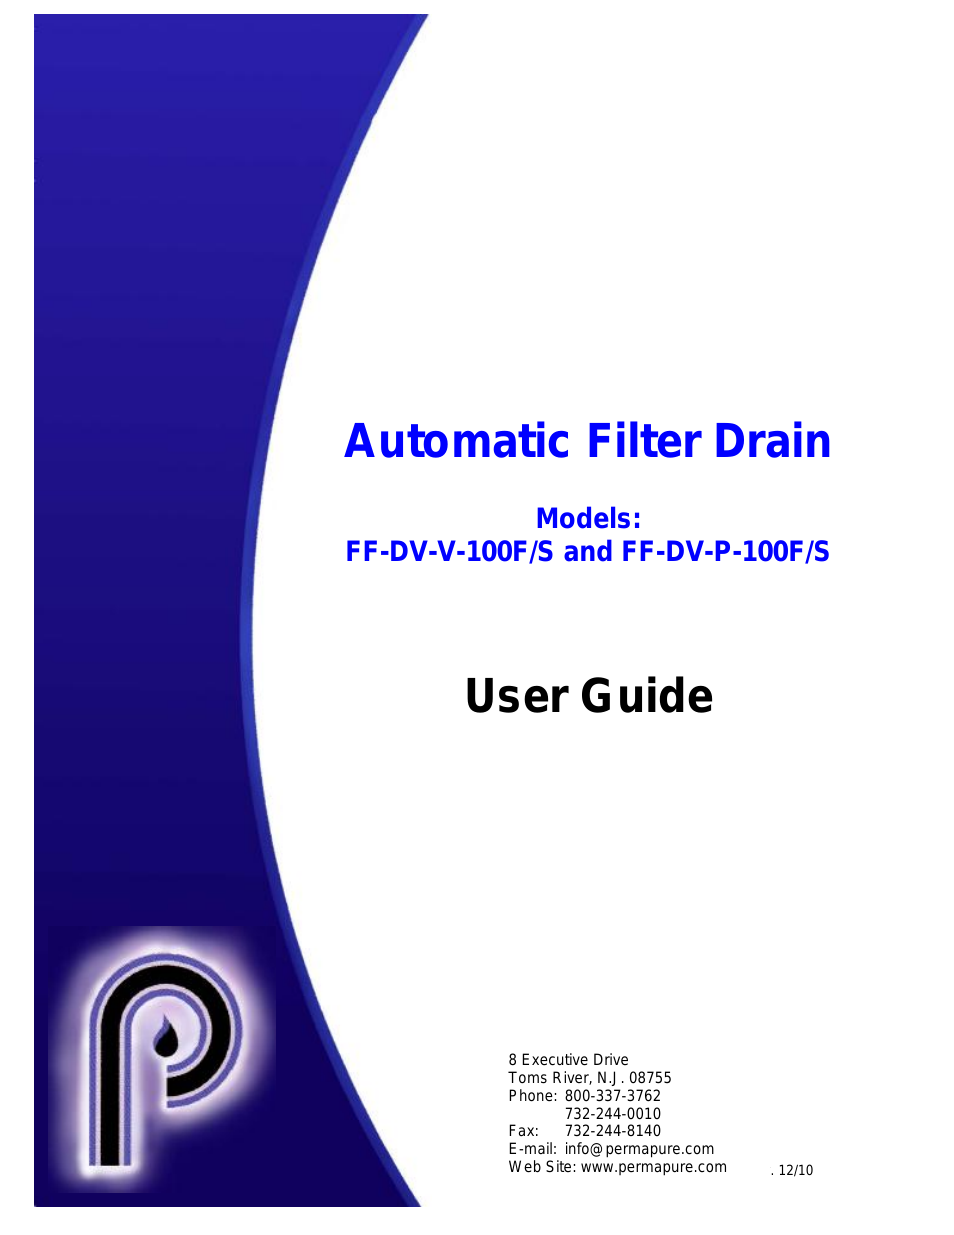 Automatic Filter Drain FF-DV-V-100F_S and FF-DV-P-100F_S